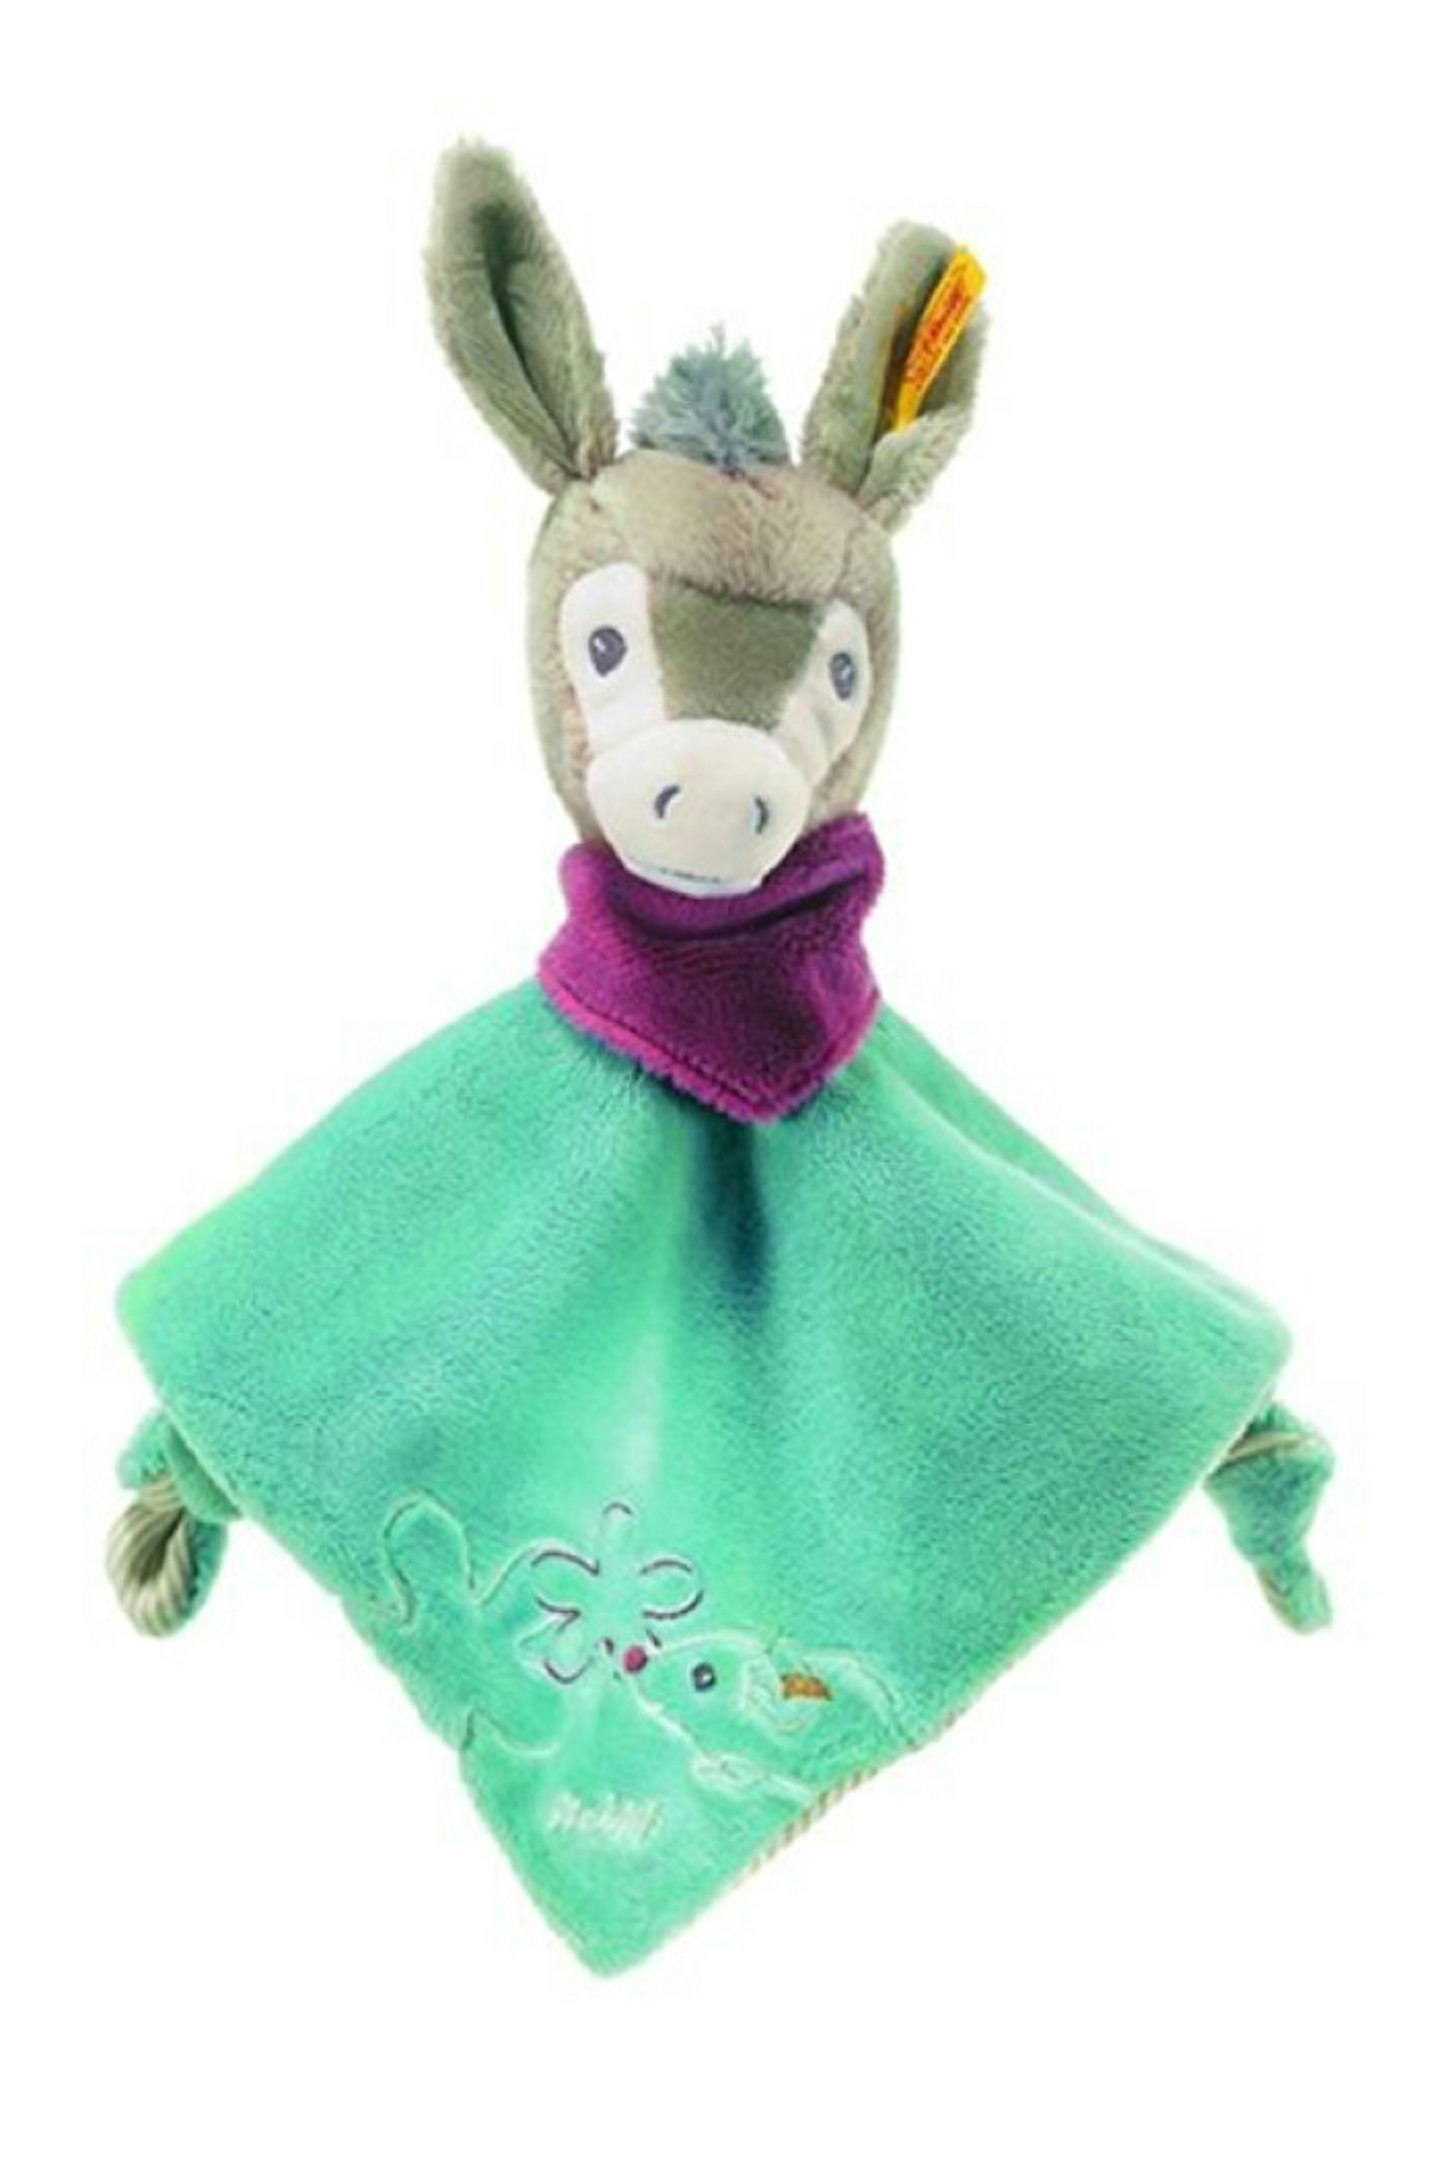 6. Steiff Issy the Donkey Comforter, £24.00, www.teddybearland.co.uk